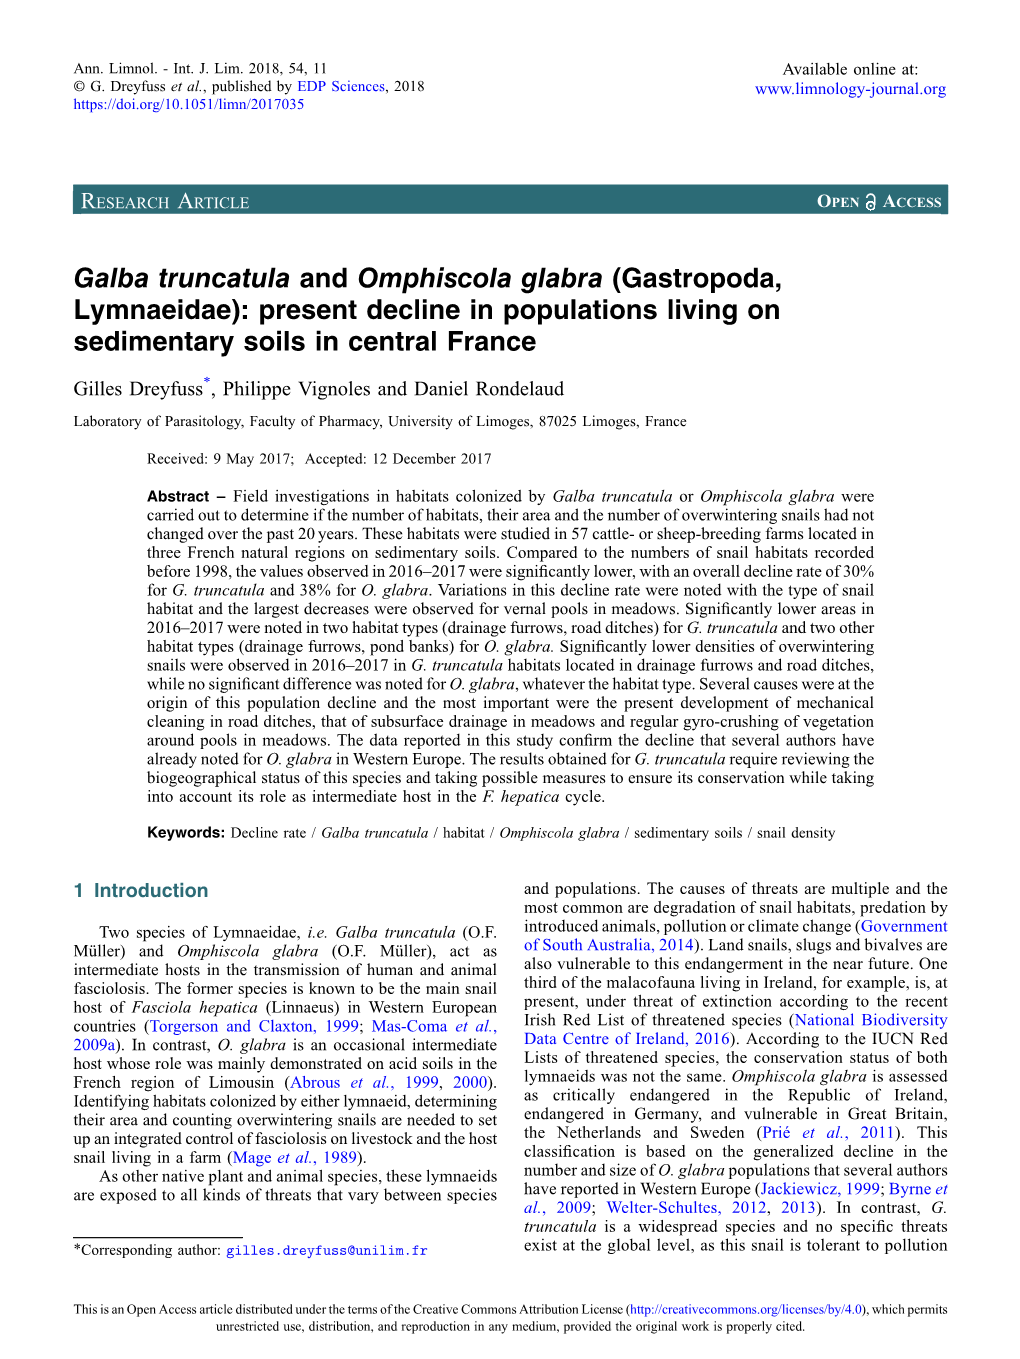 Galba Truncatula and Omphiscola Glabra (Gastropoda, Lymnaeidae): Present Decline in Populations Living on Sedimentary Soils in Central France